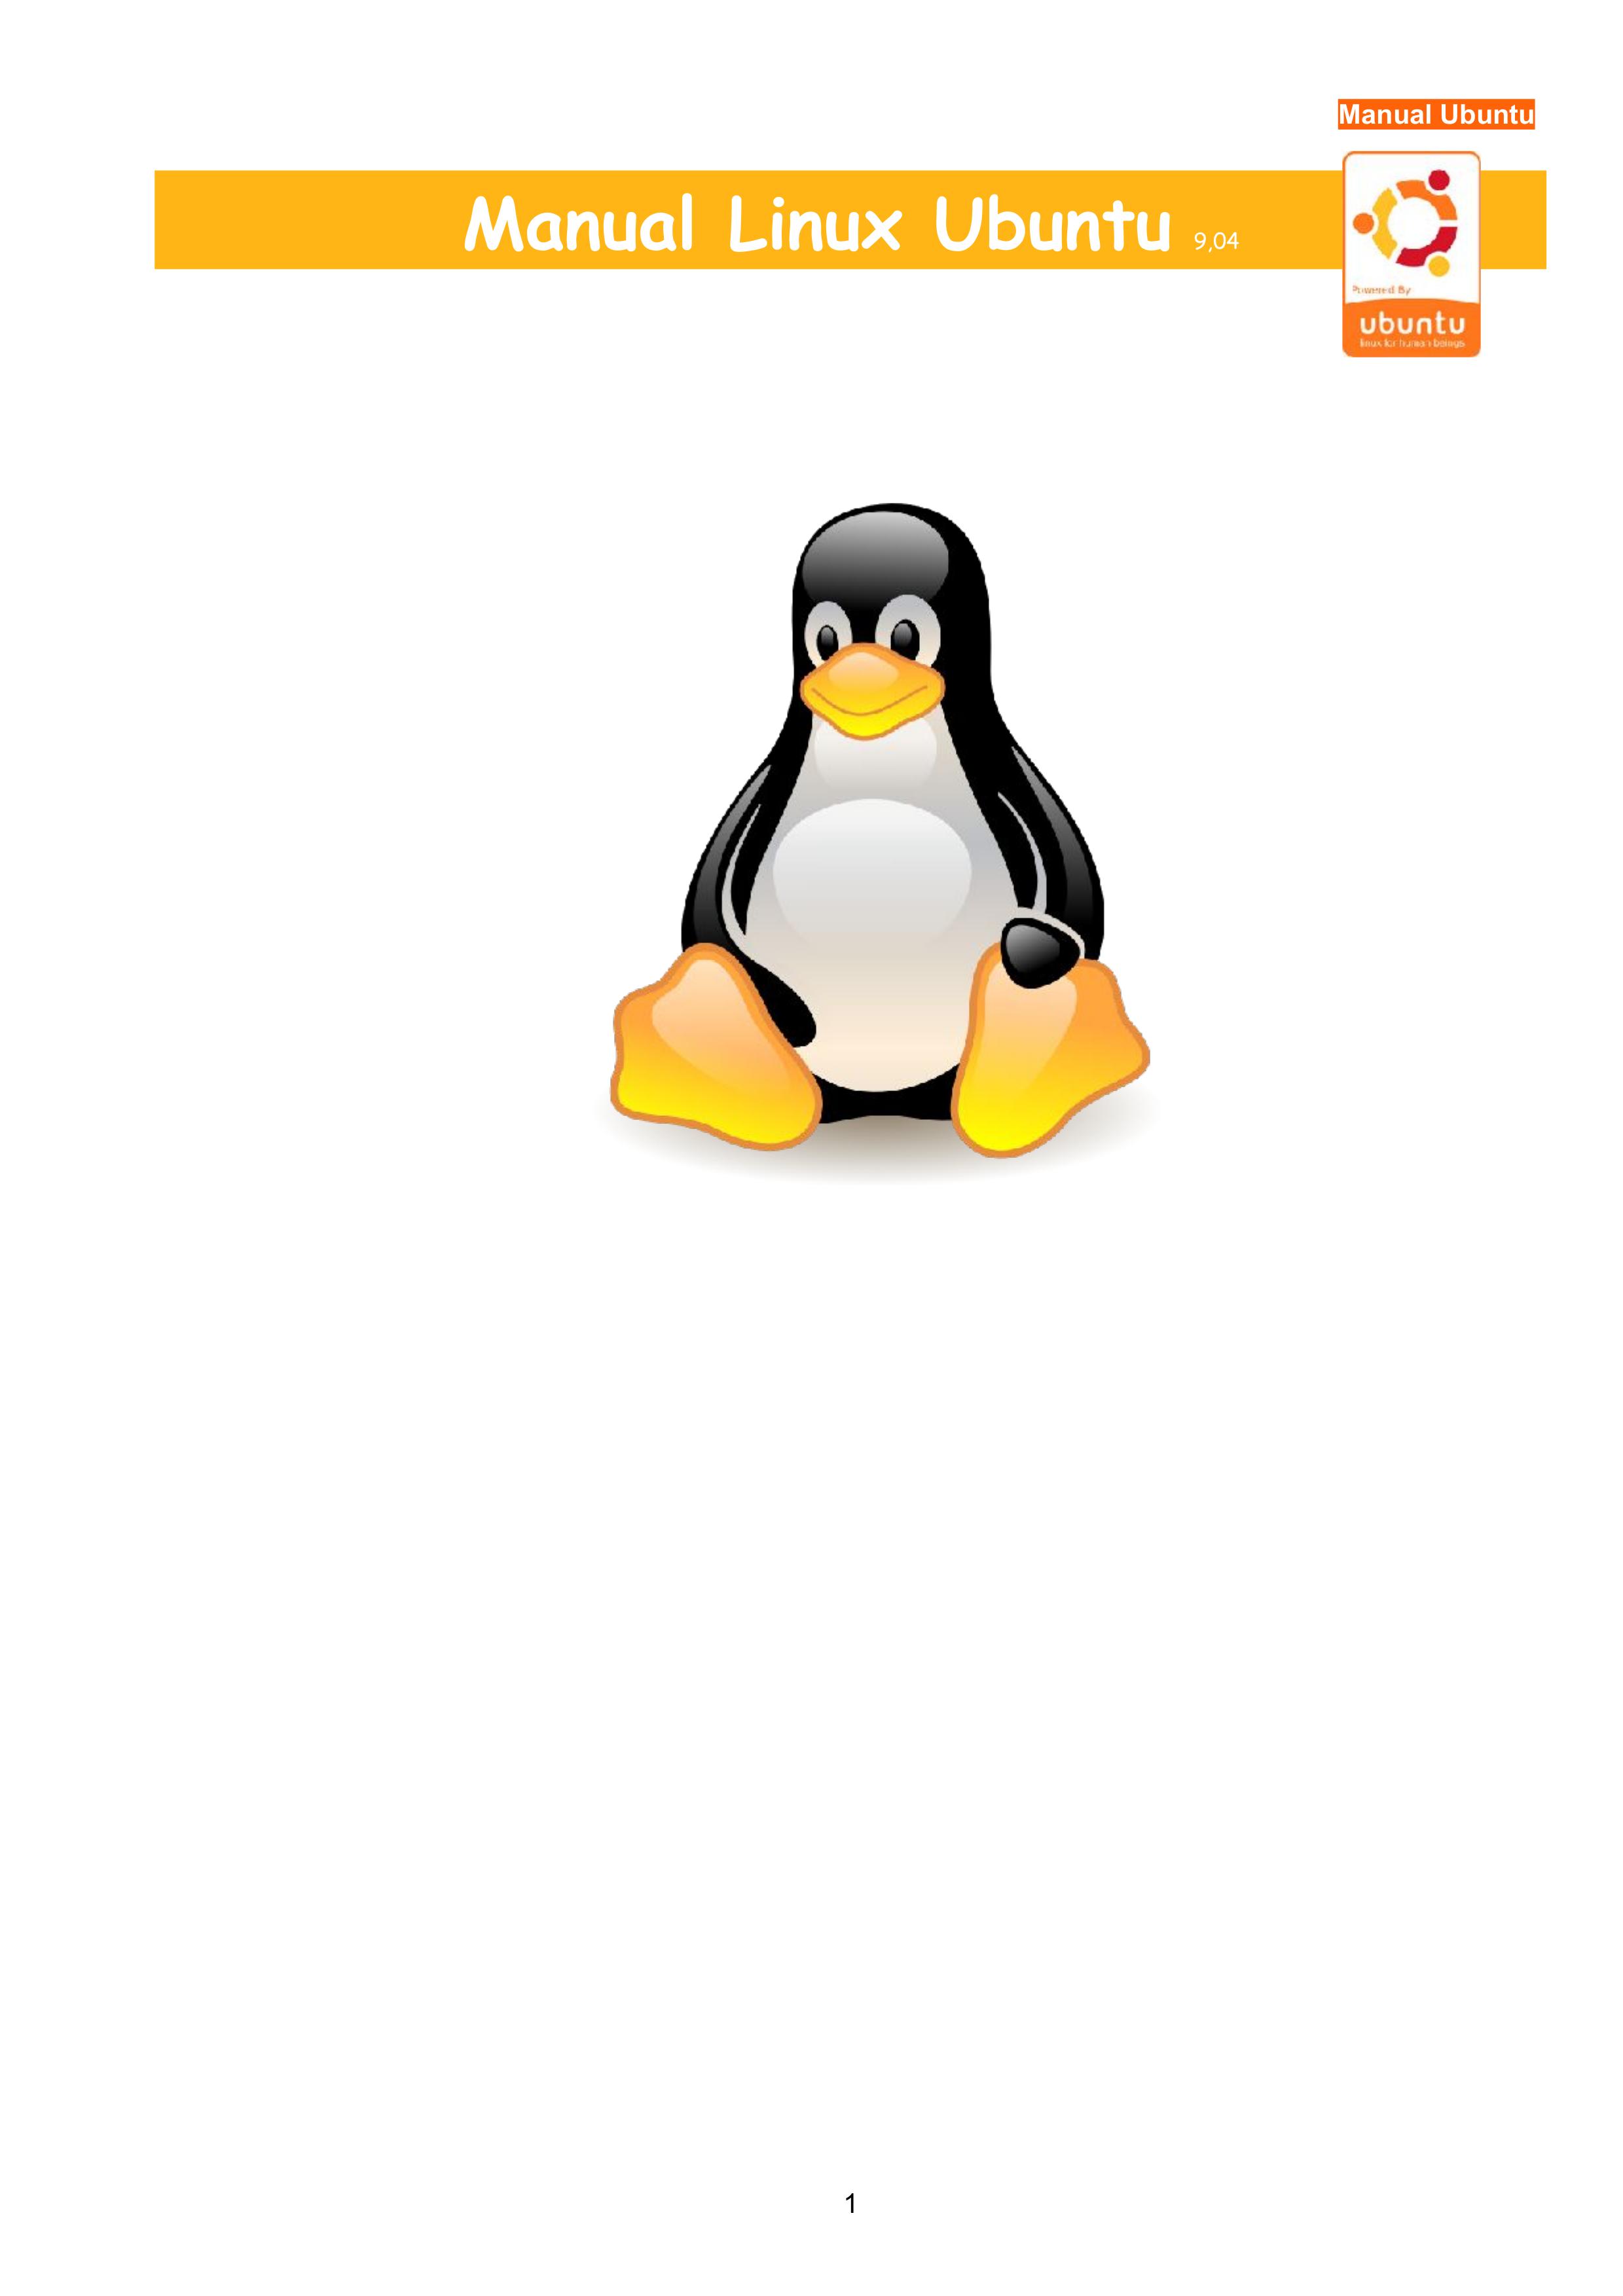 Manual Linux Ubuntu